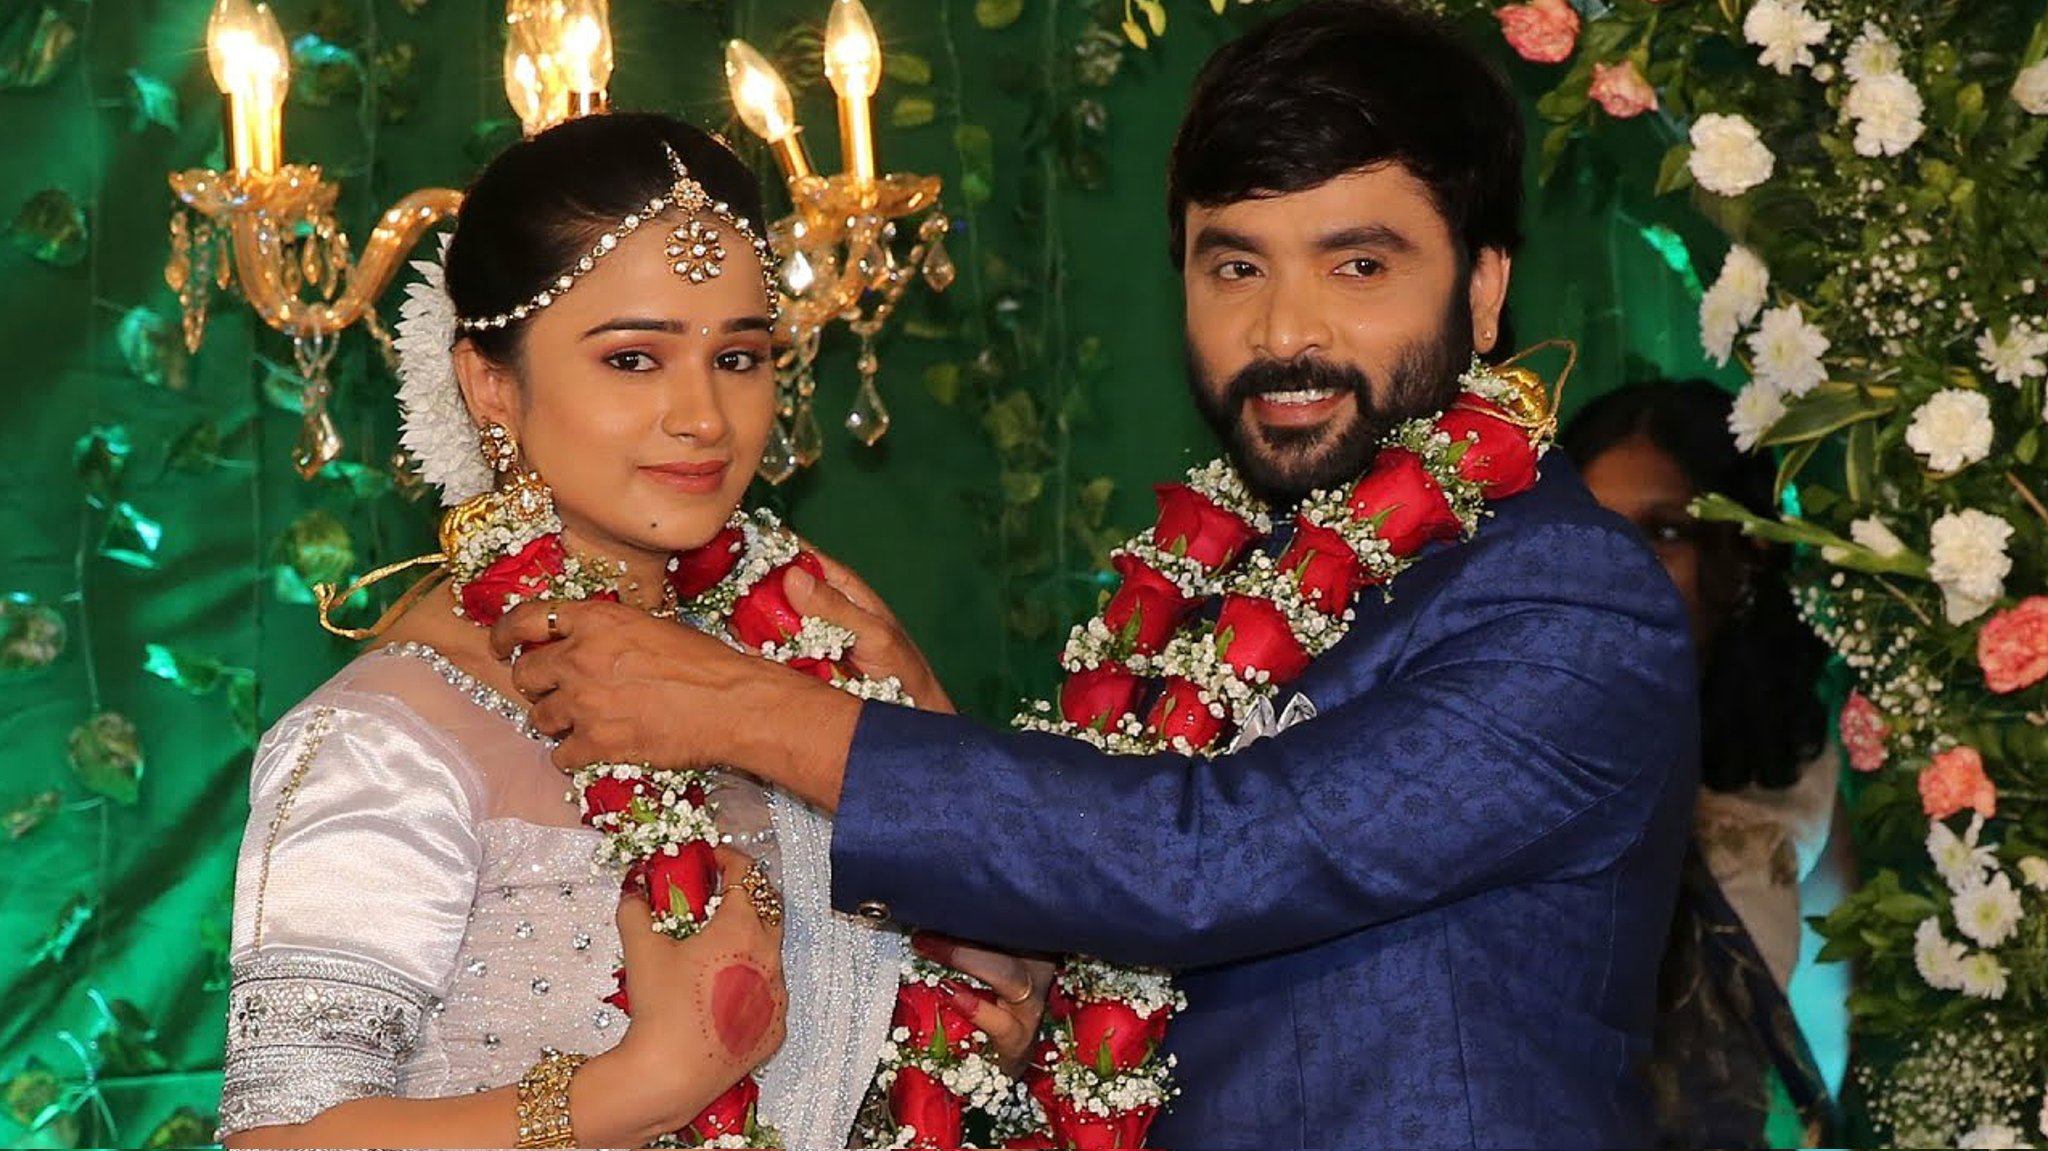 Snehan and Kannika Ravi’s wedding reception video ft Bigg Boss Tamil stars Suja, Ganesh, Aarav